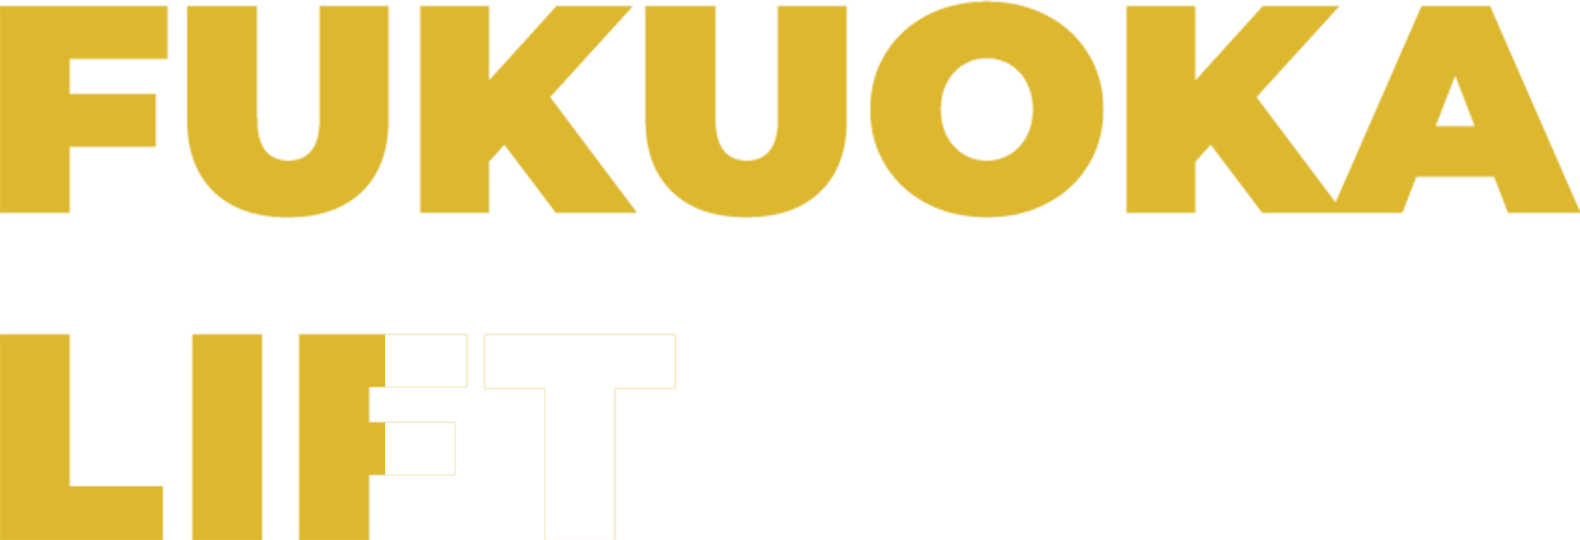 FUKUOKA LIFT